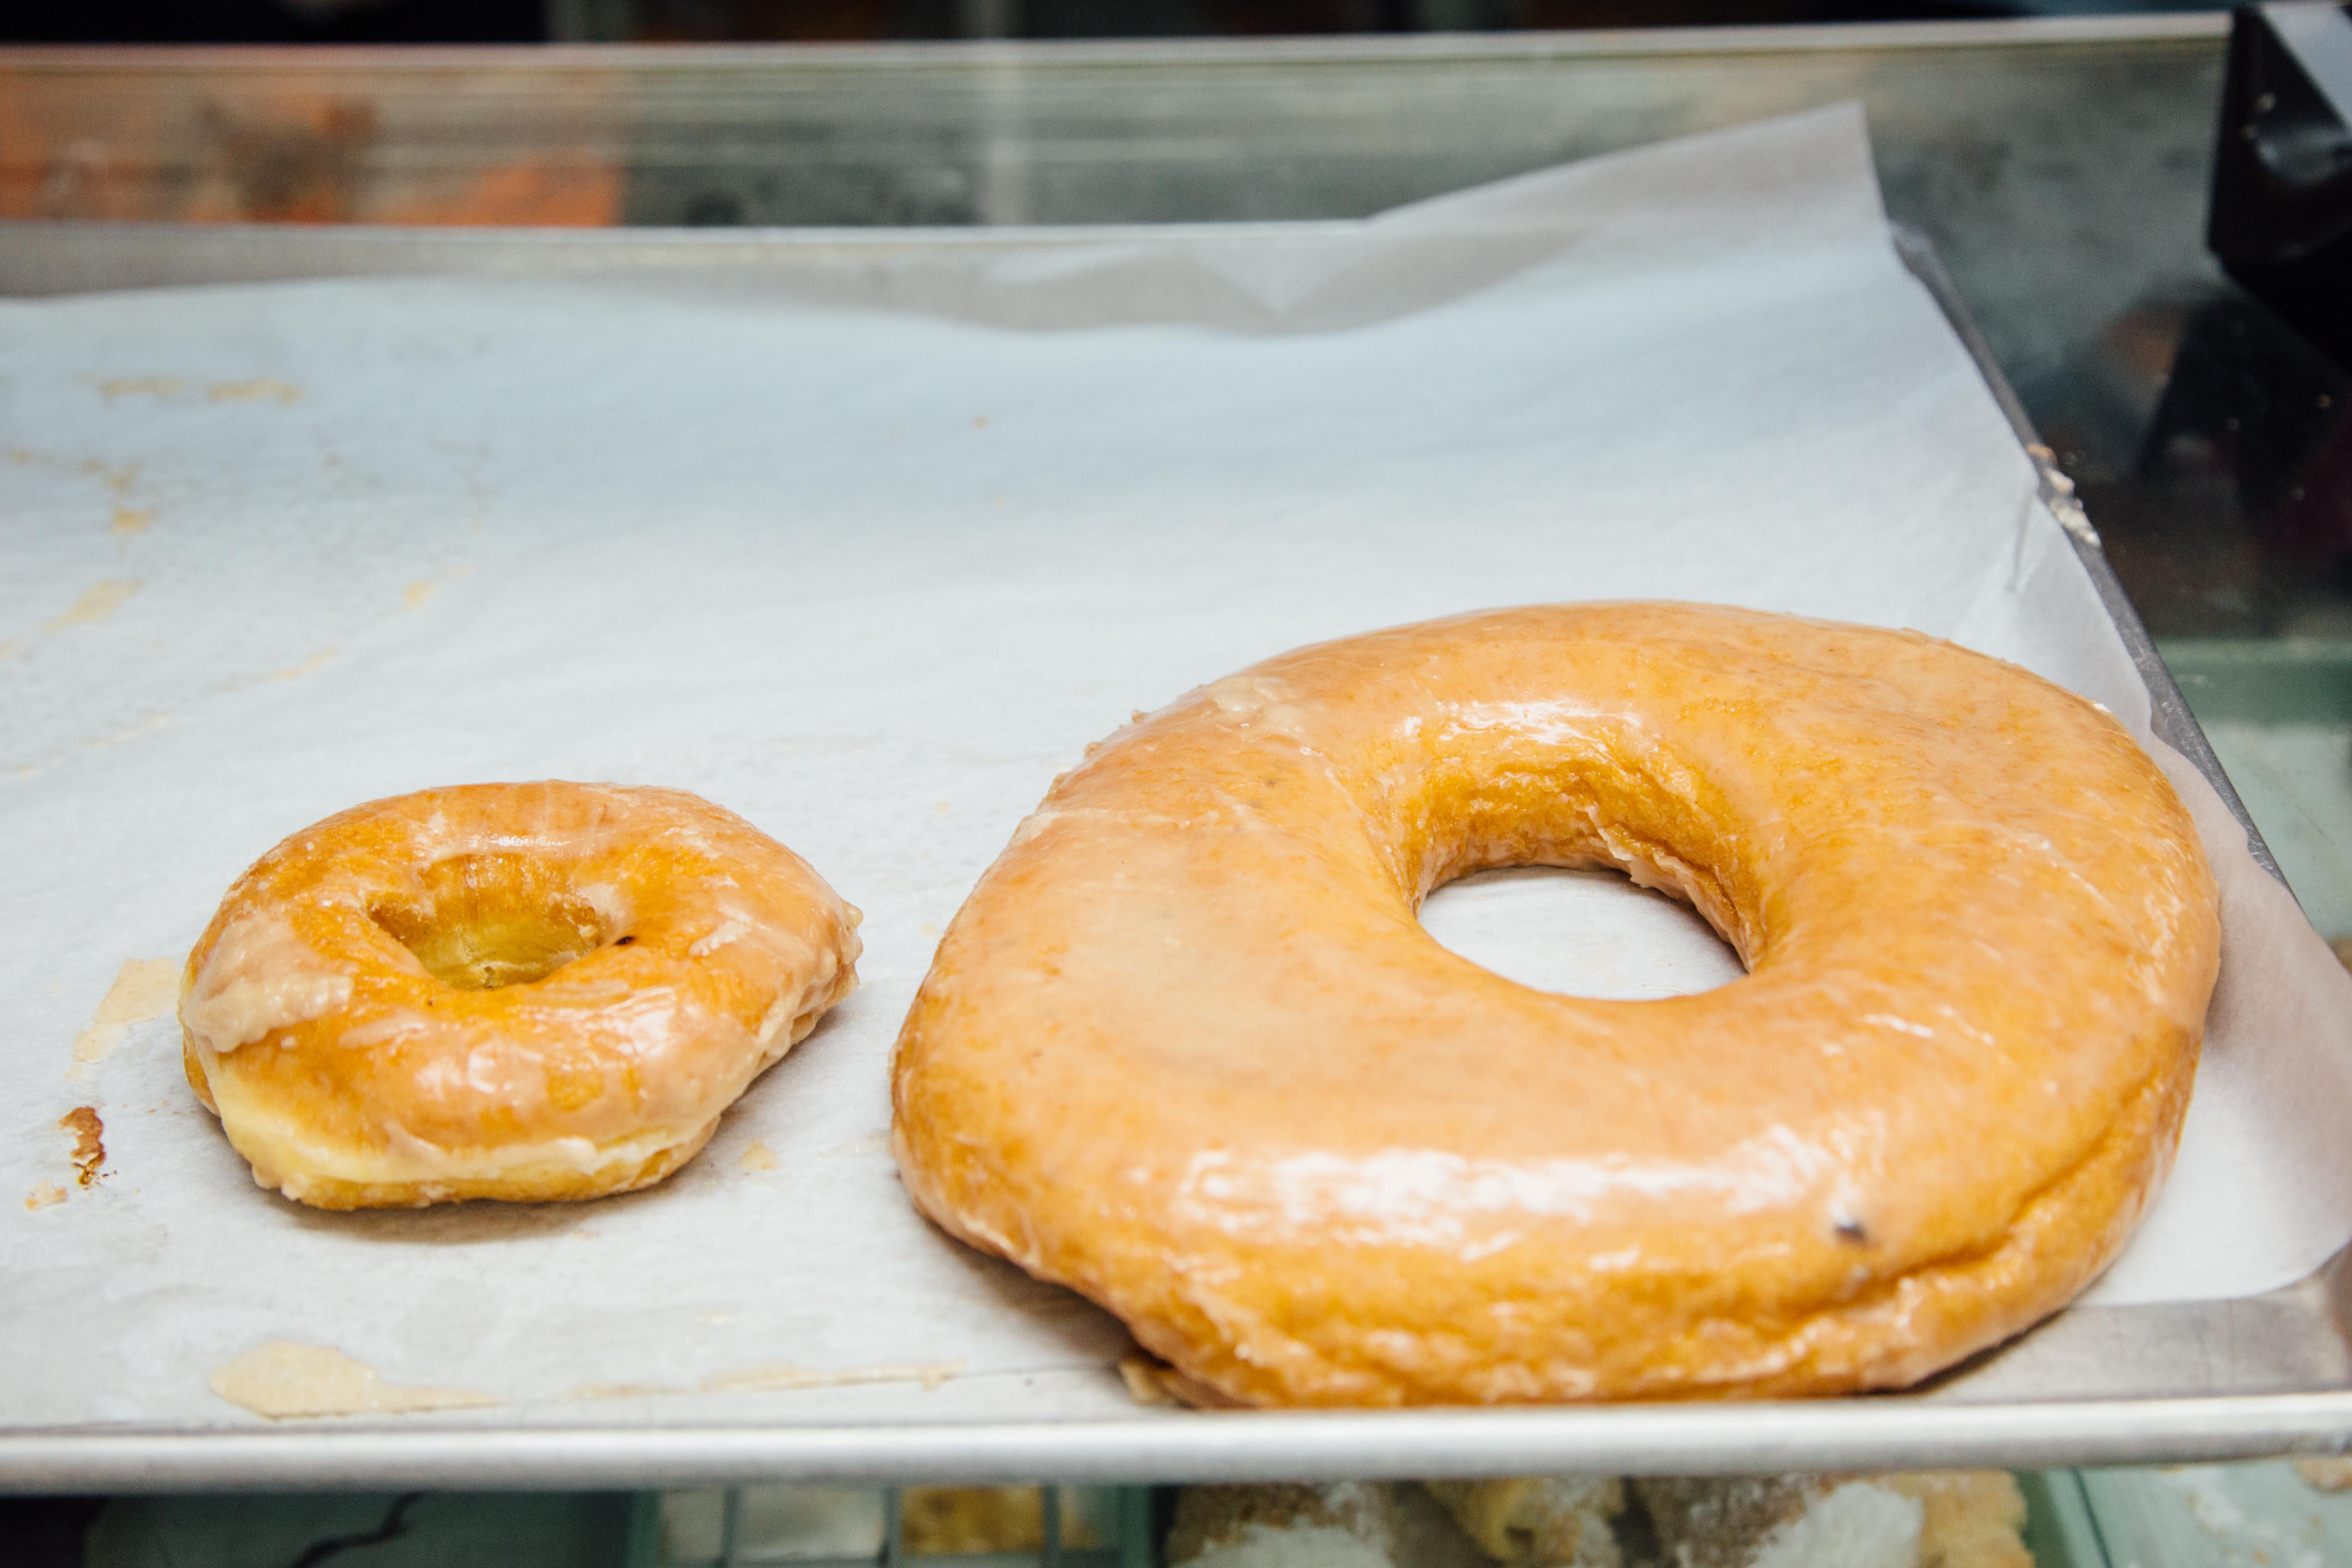 regular glazed donut next to the Texas Donut.